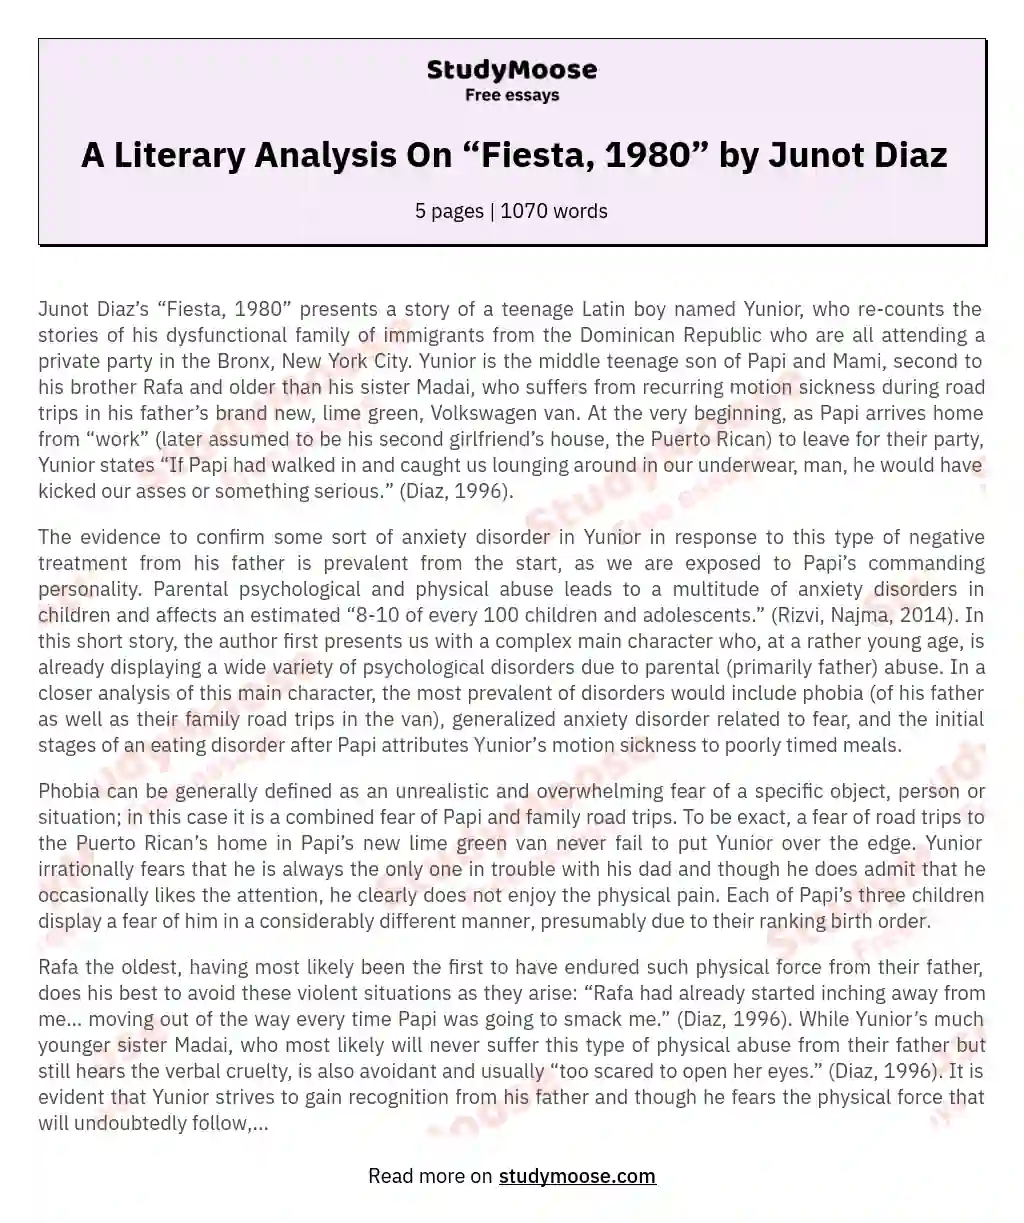 A Literary Analysis On “Fiesta, 1980” by Junot Diaz essay